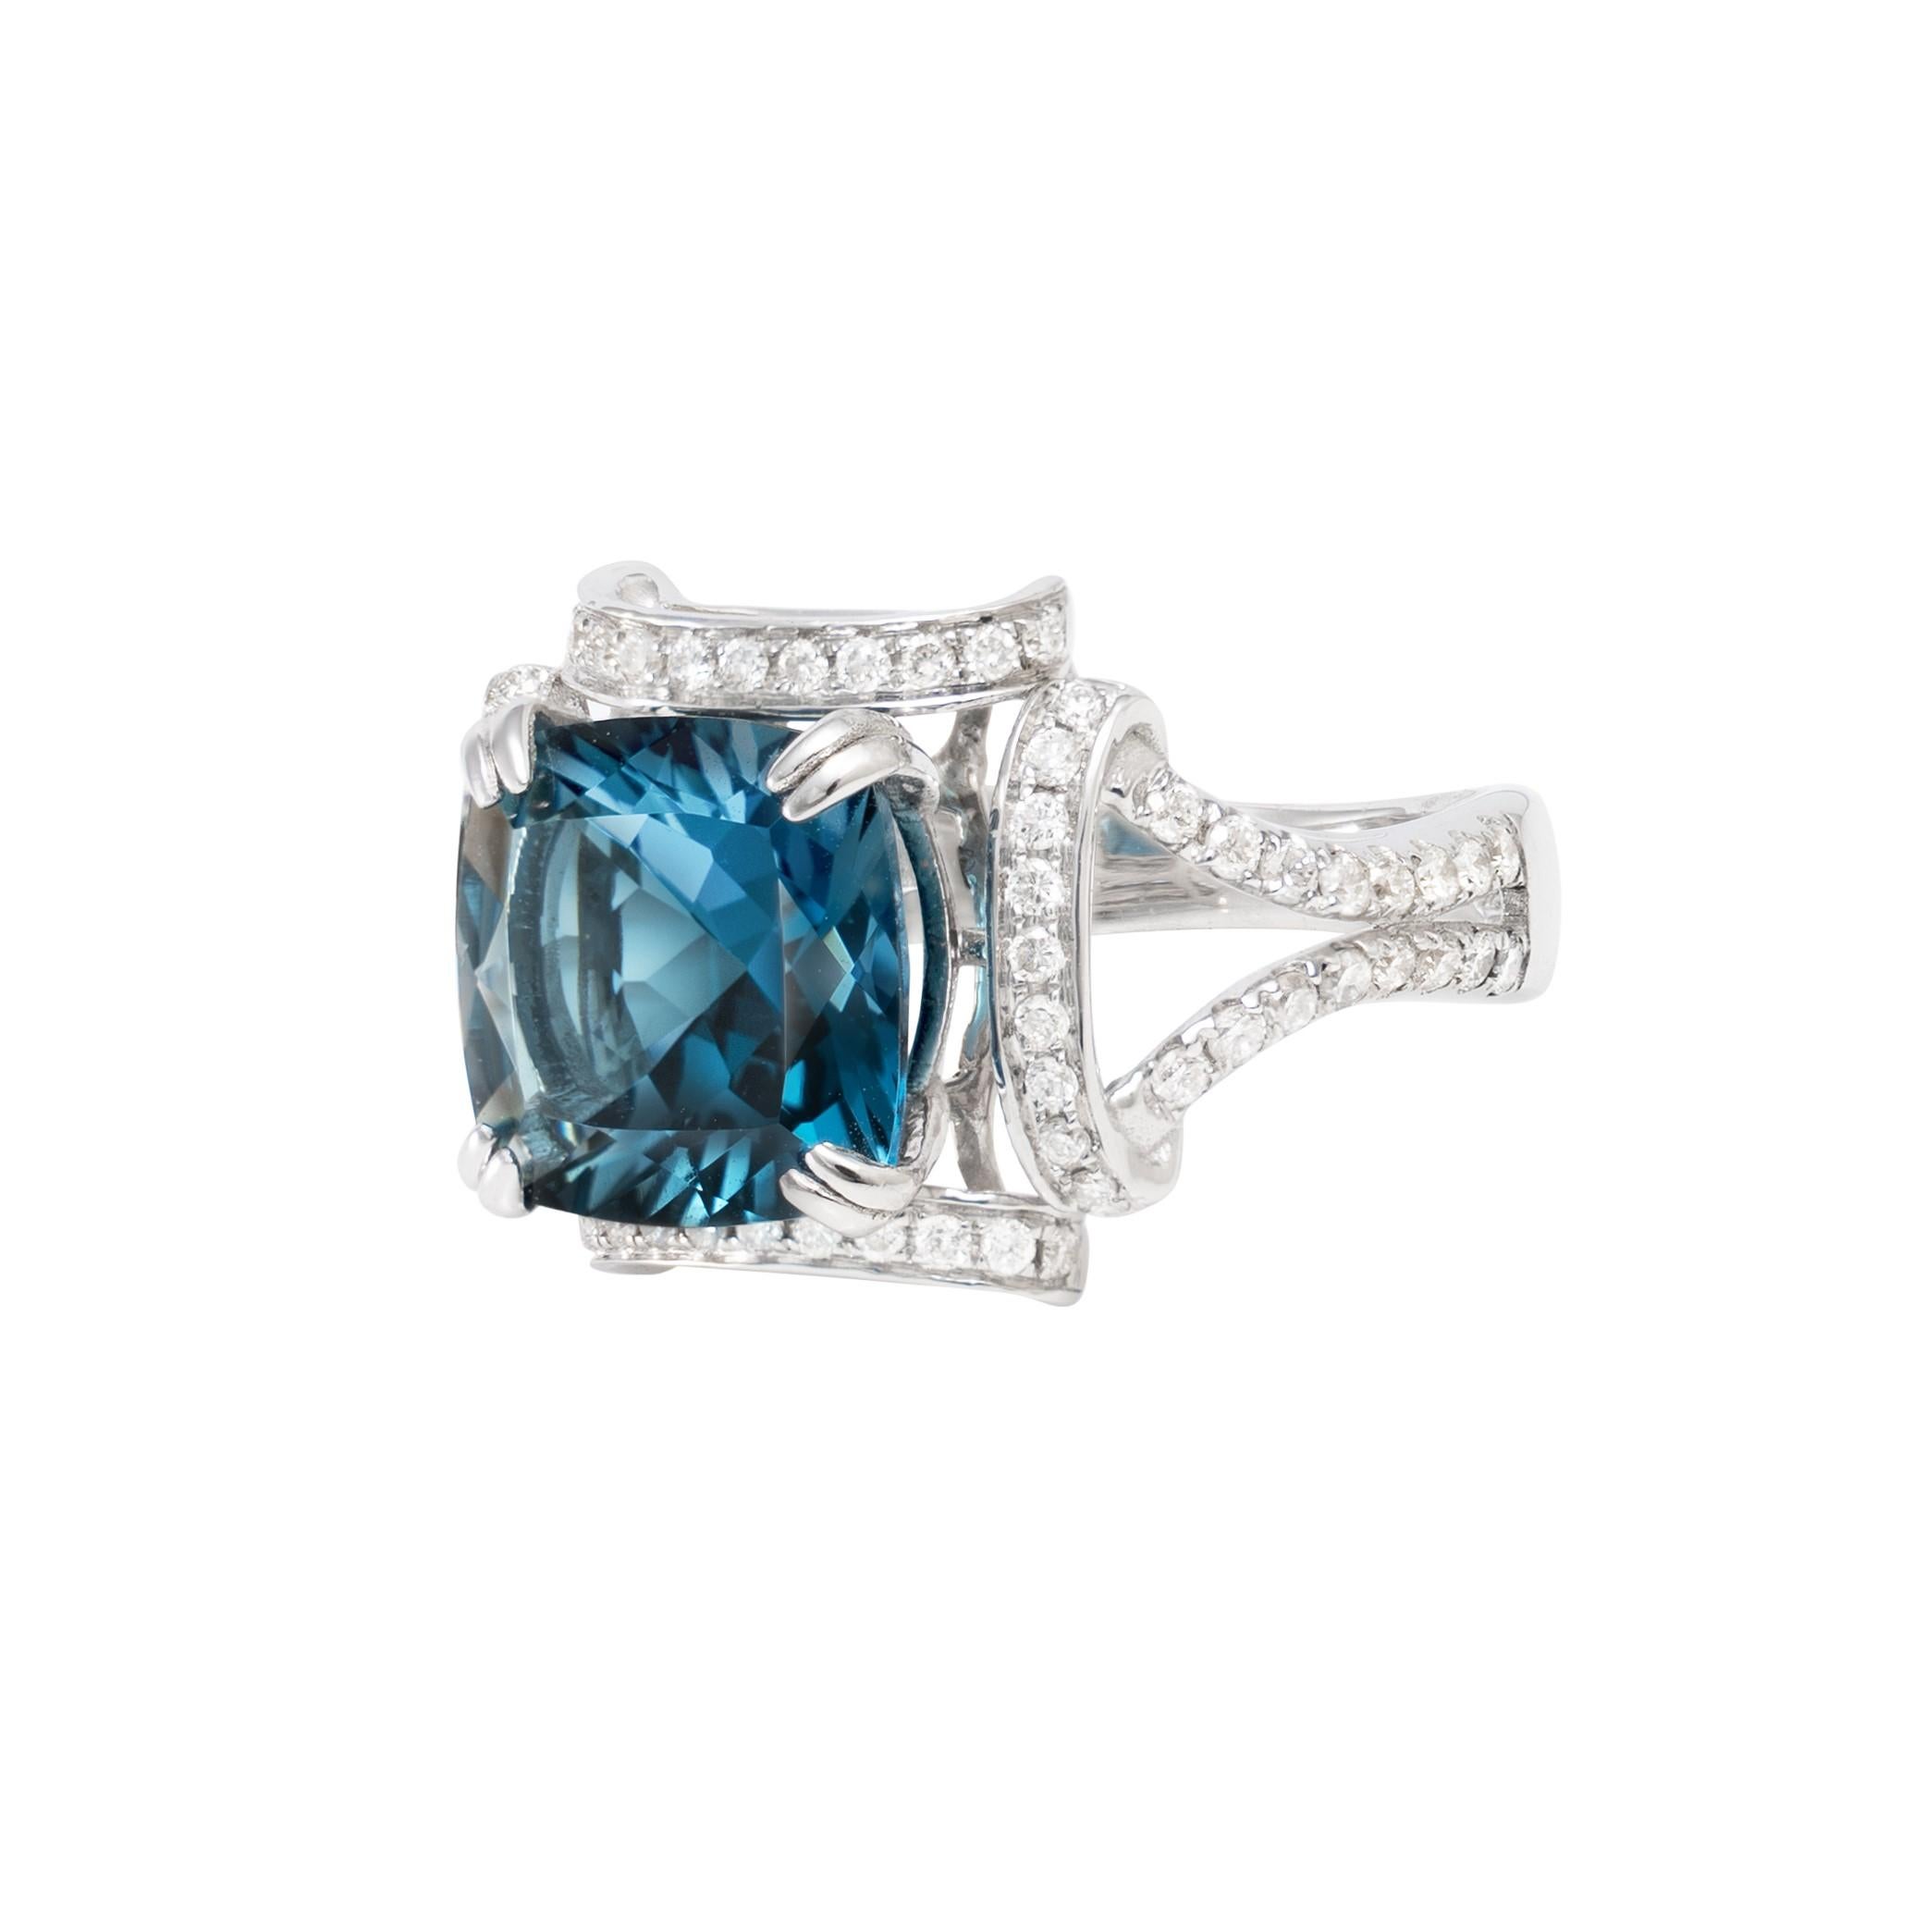 Cushion Cut 4.4 Carat London Blue Topaz Ring with Diamond in 18 Karat White Gold For Sale